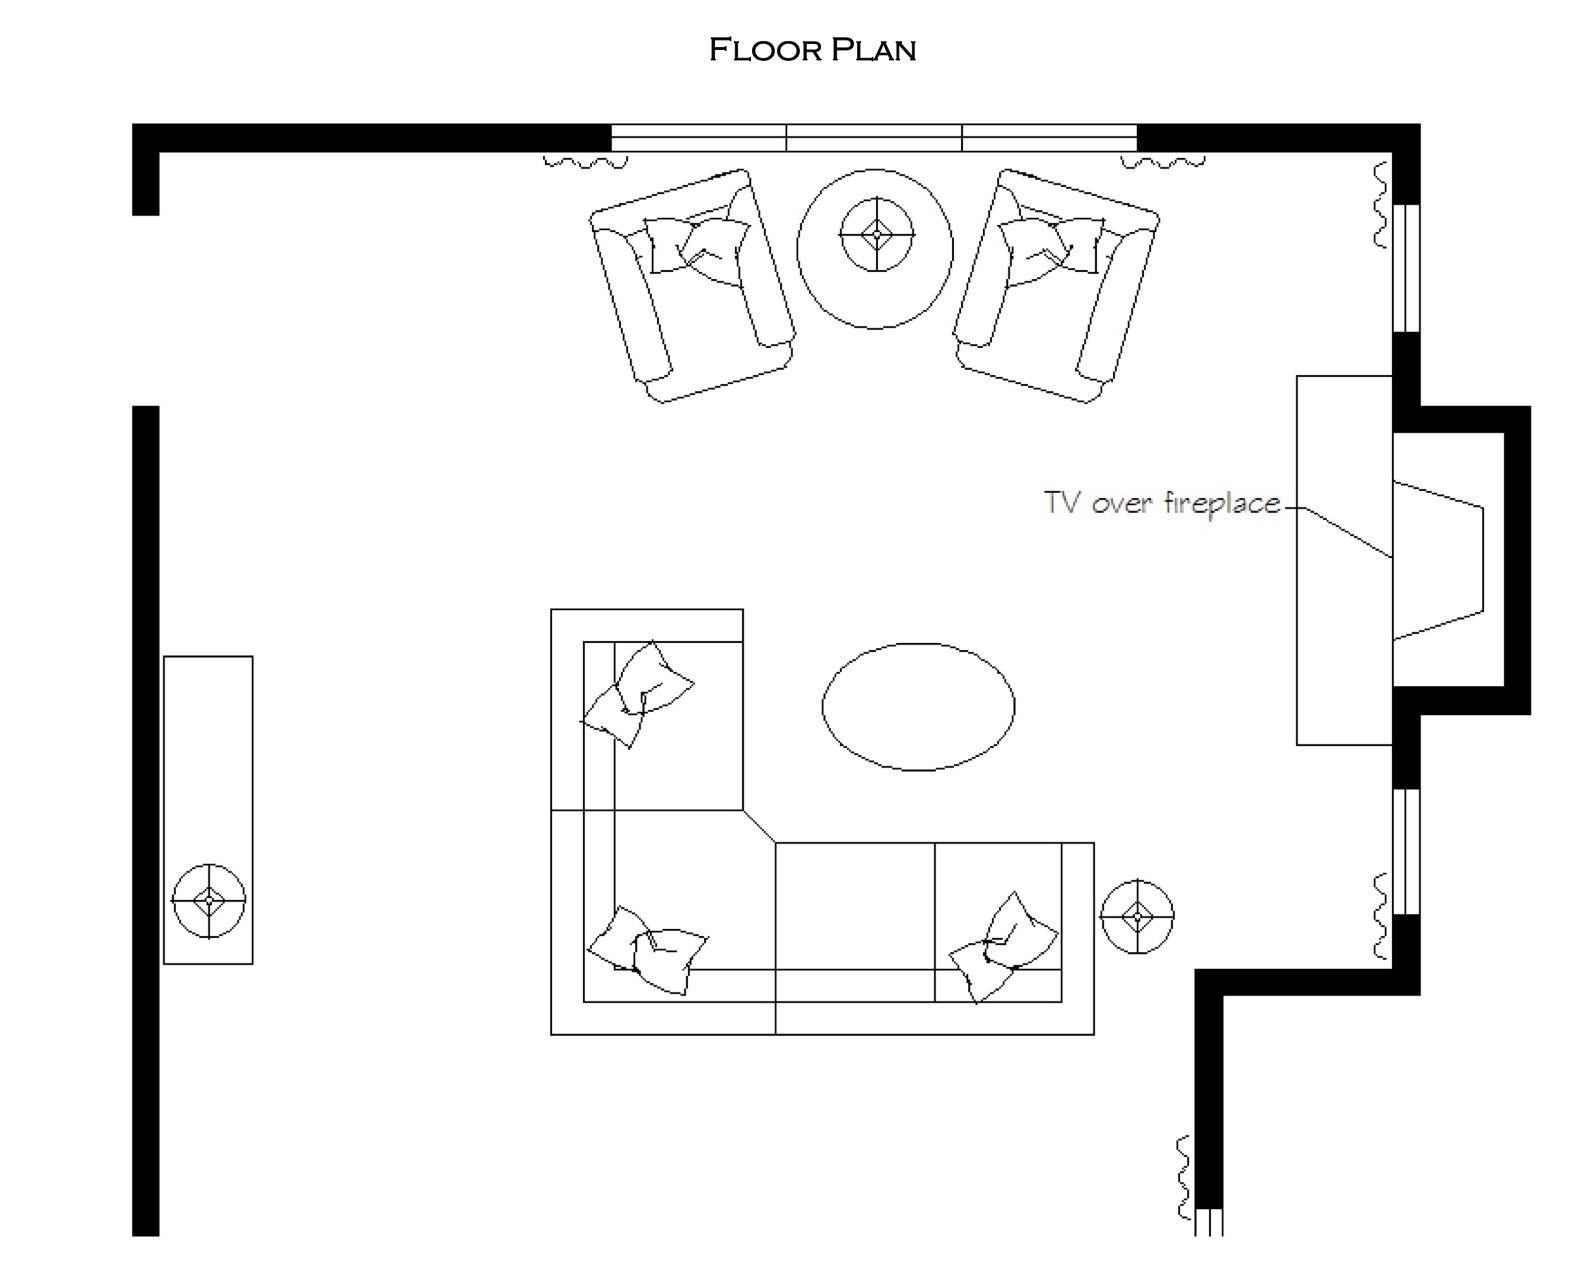 план комнаты с мебелью с размерами